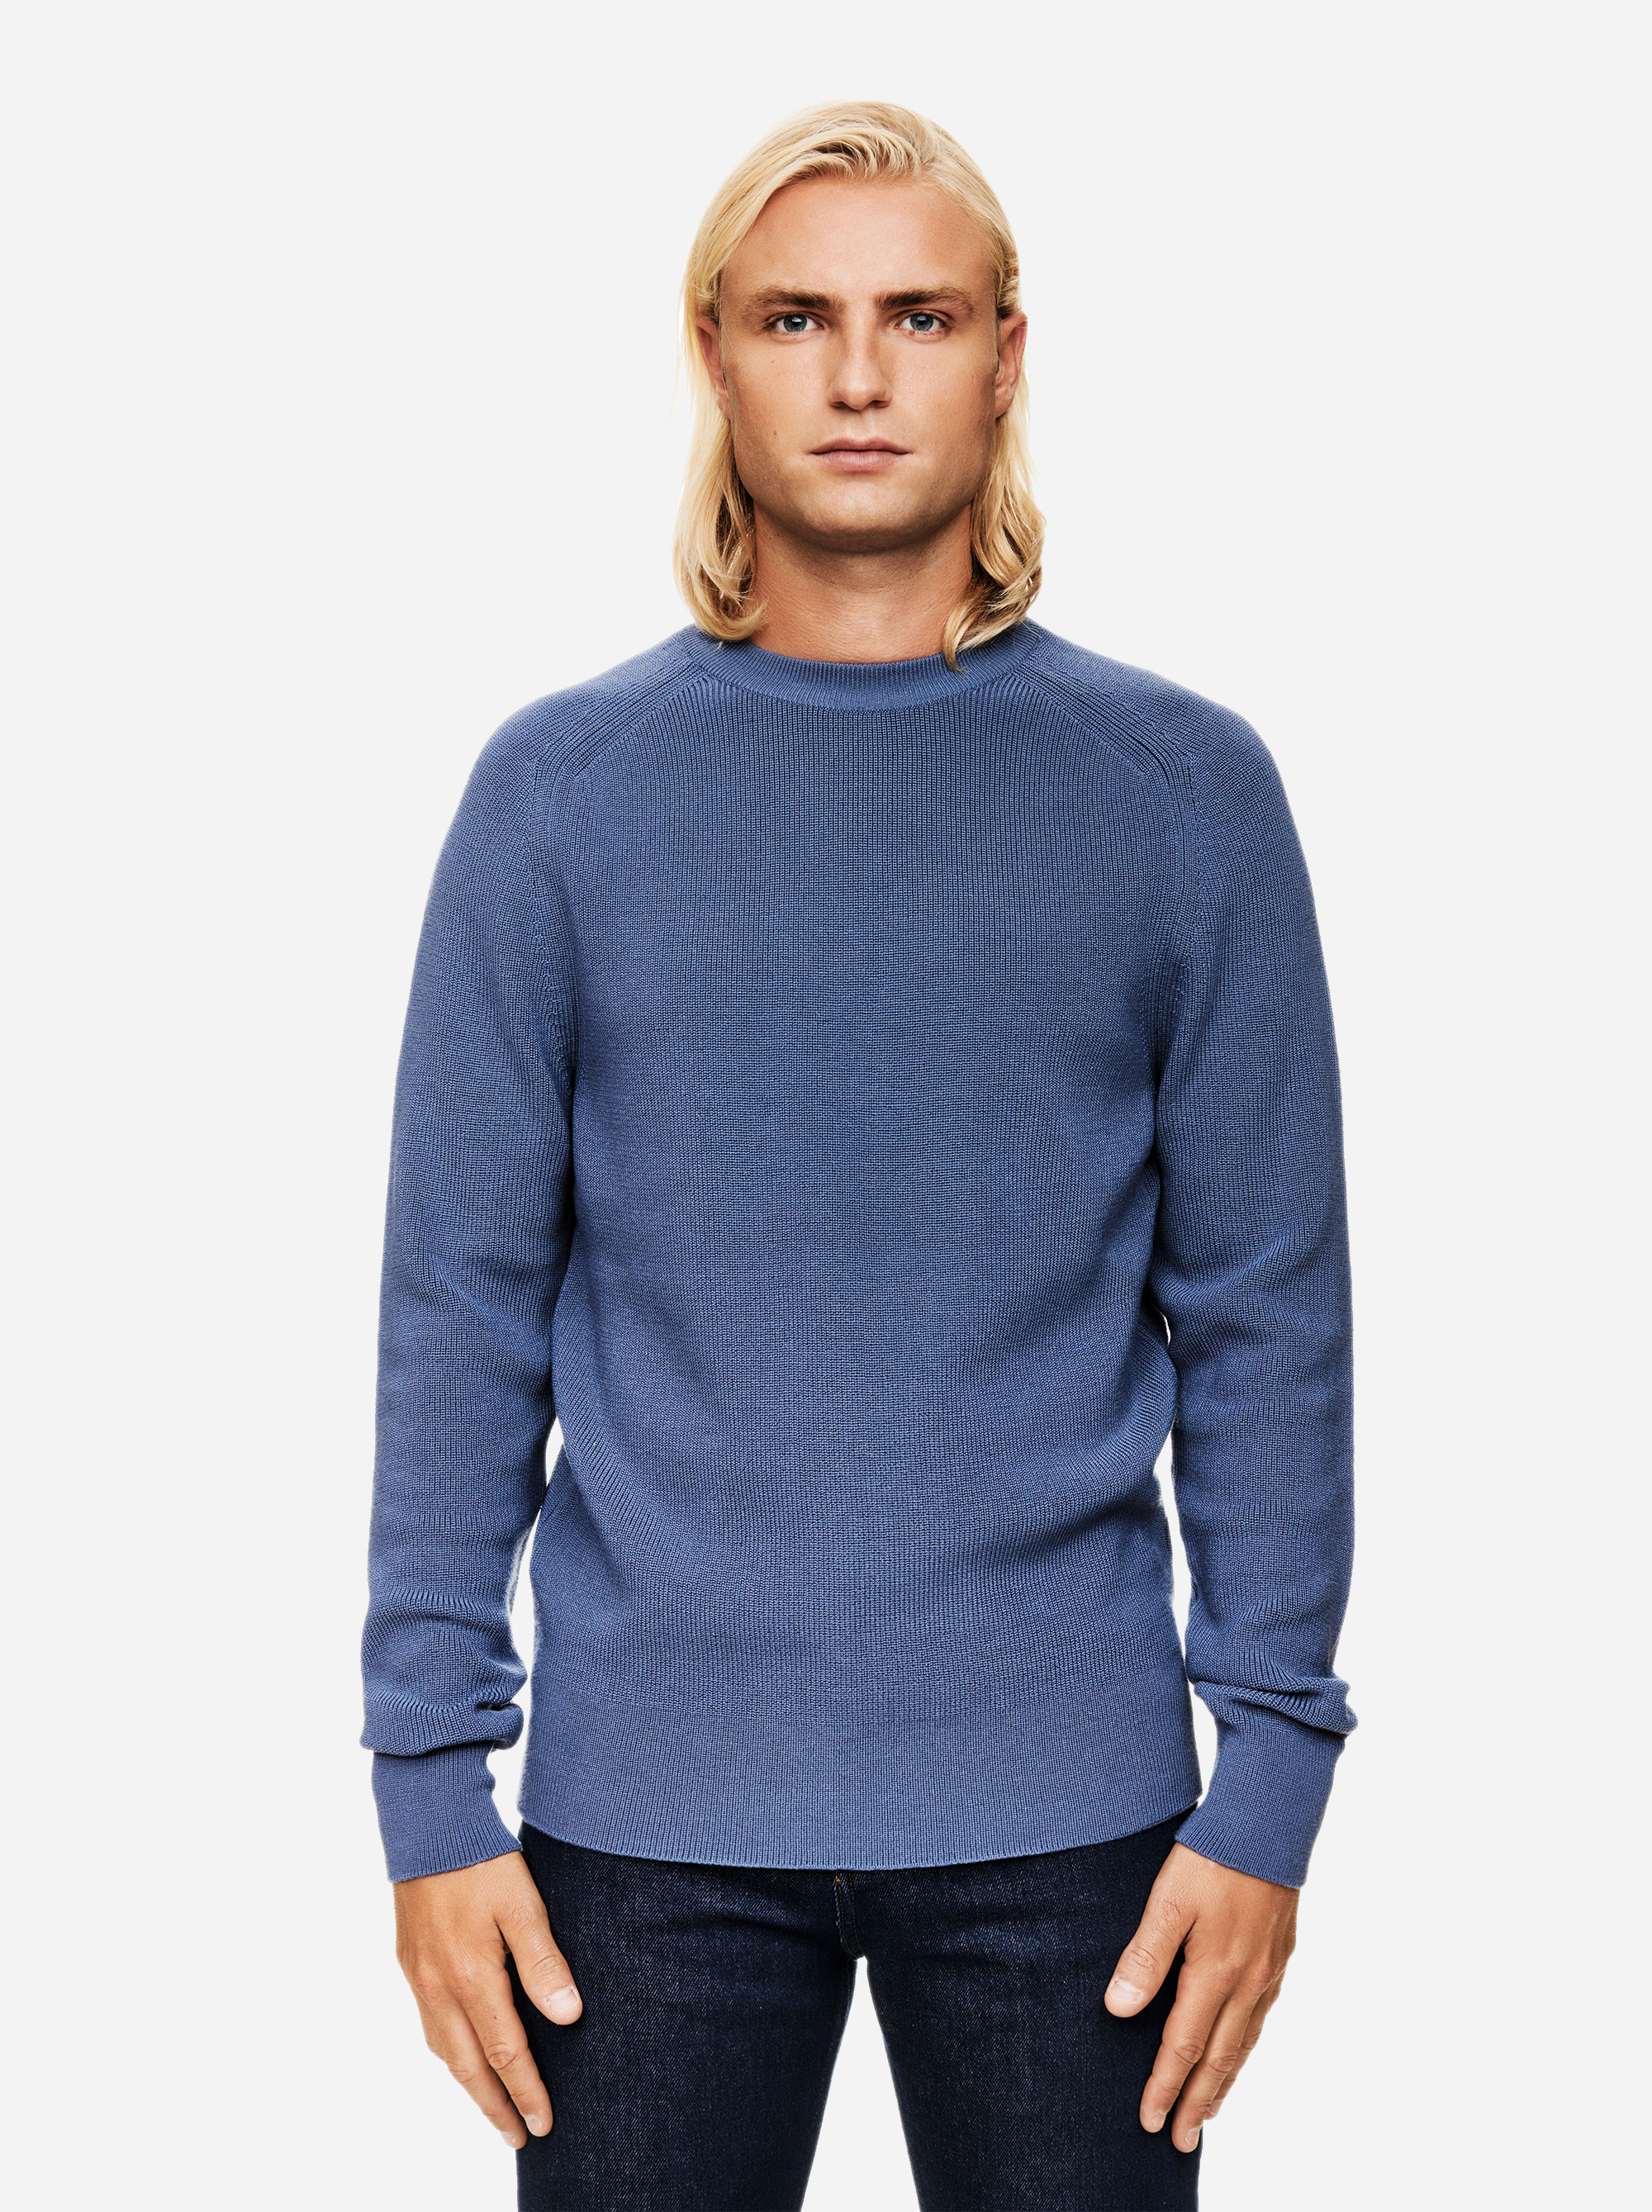 Teym - The Merino Sweater - Men - Sky blue - 1